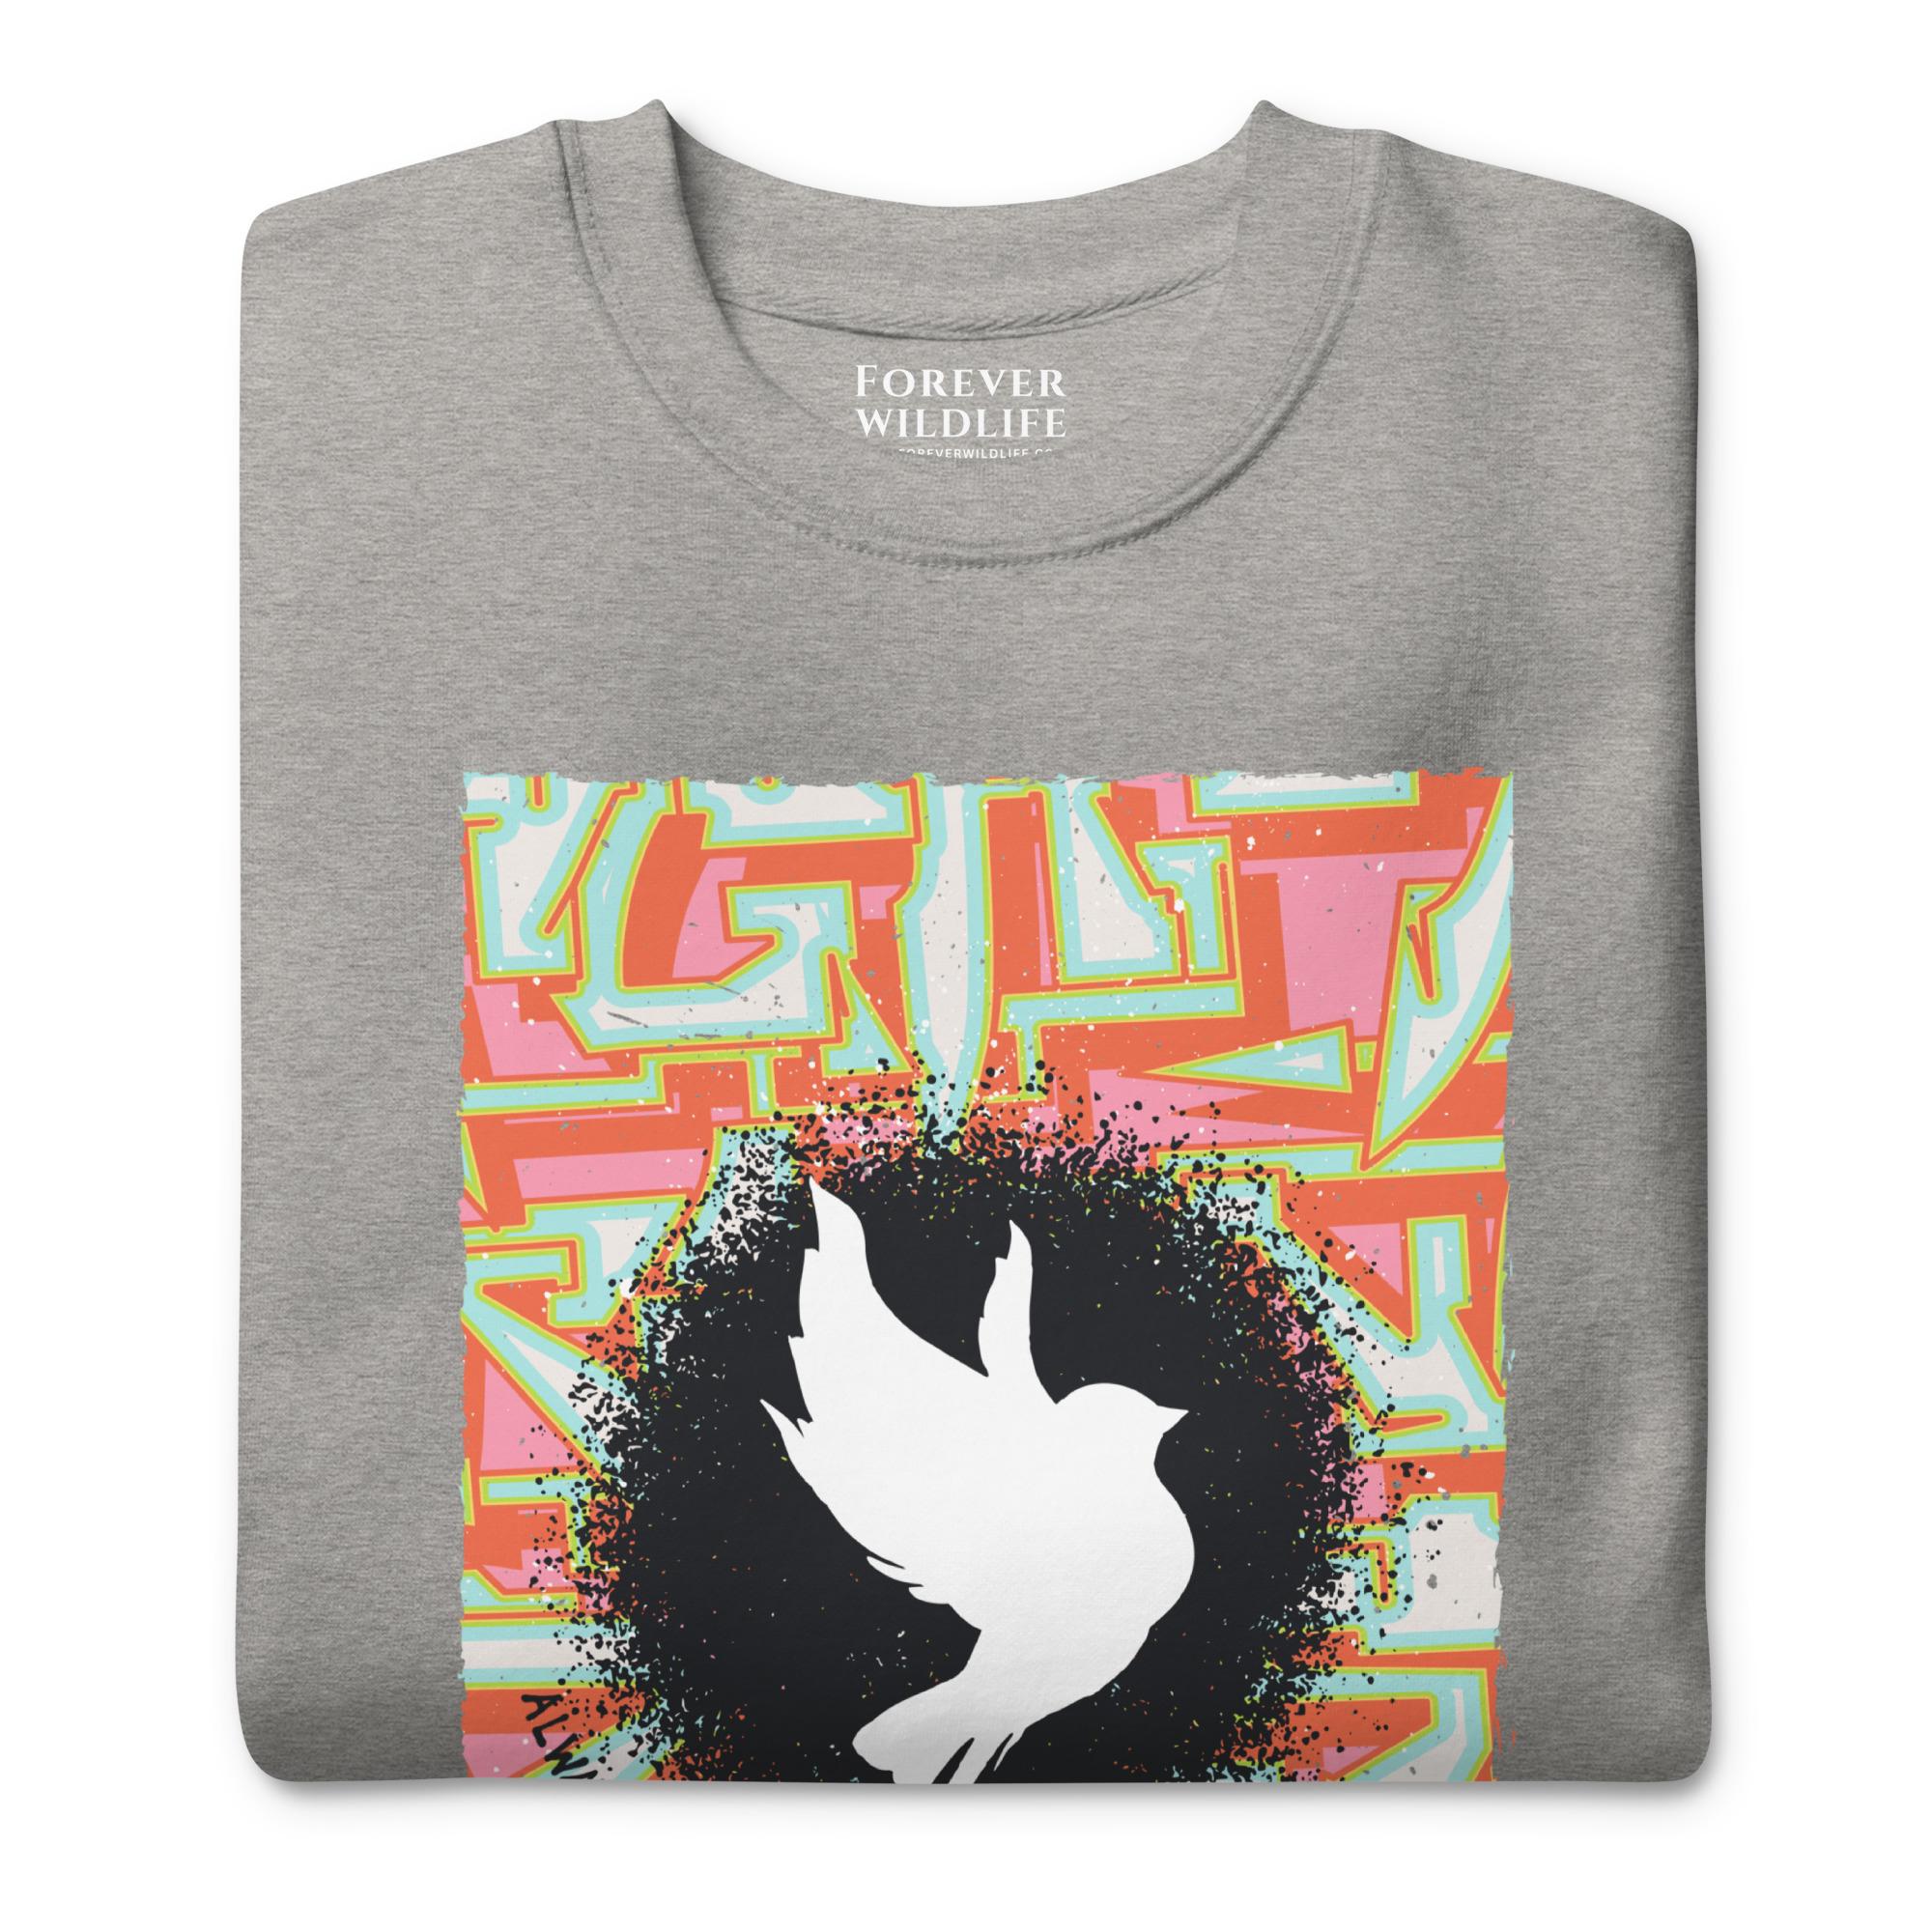 Dove Sweatshirt in Grey-Premium Wildlife Animal Inspiration Sweatshirt Design with 'Always Follow Your Dreams' text, part of Wildlife Sweatshirts & Clothing from Forever Wildlife.